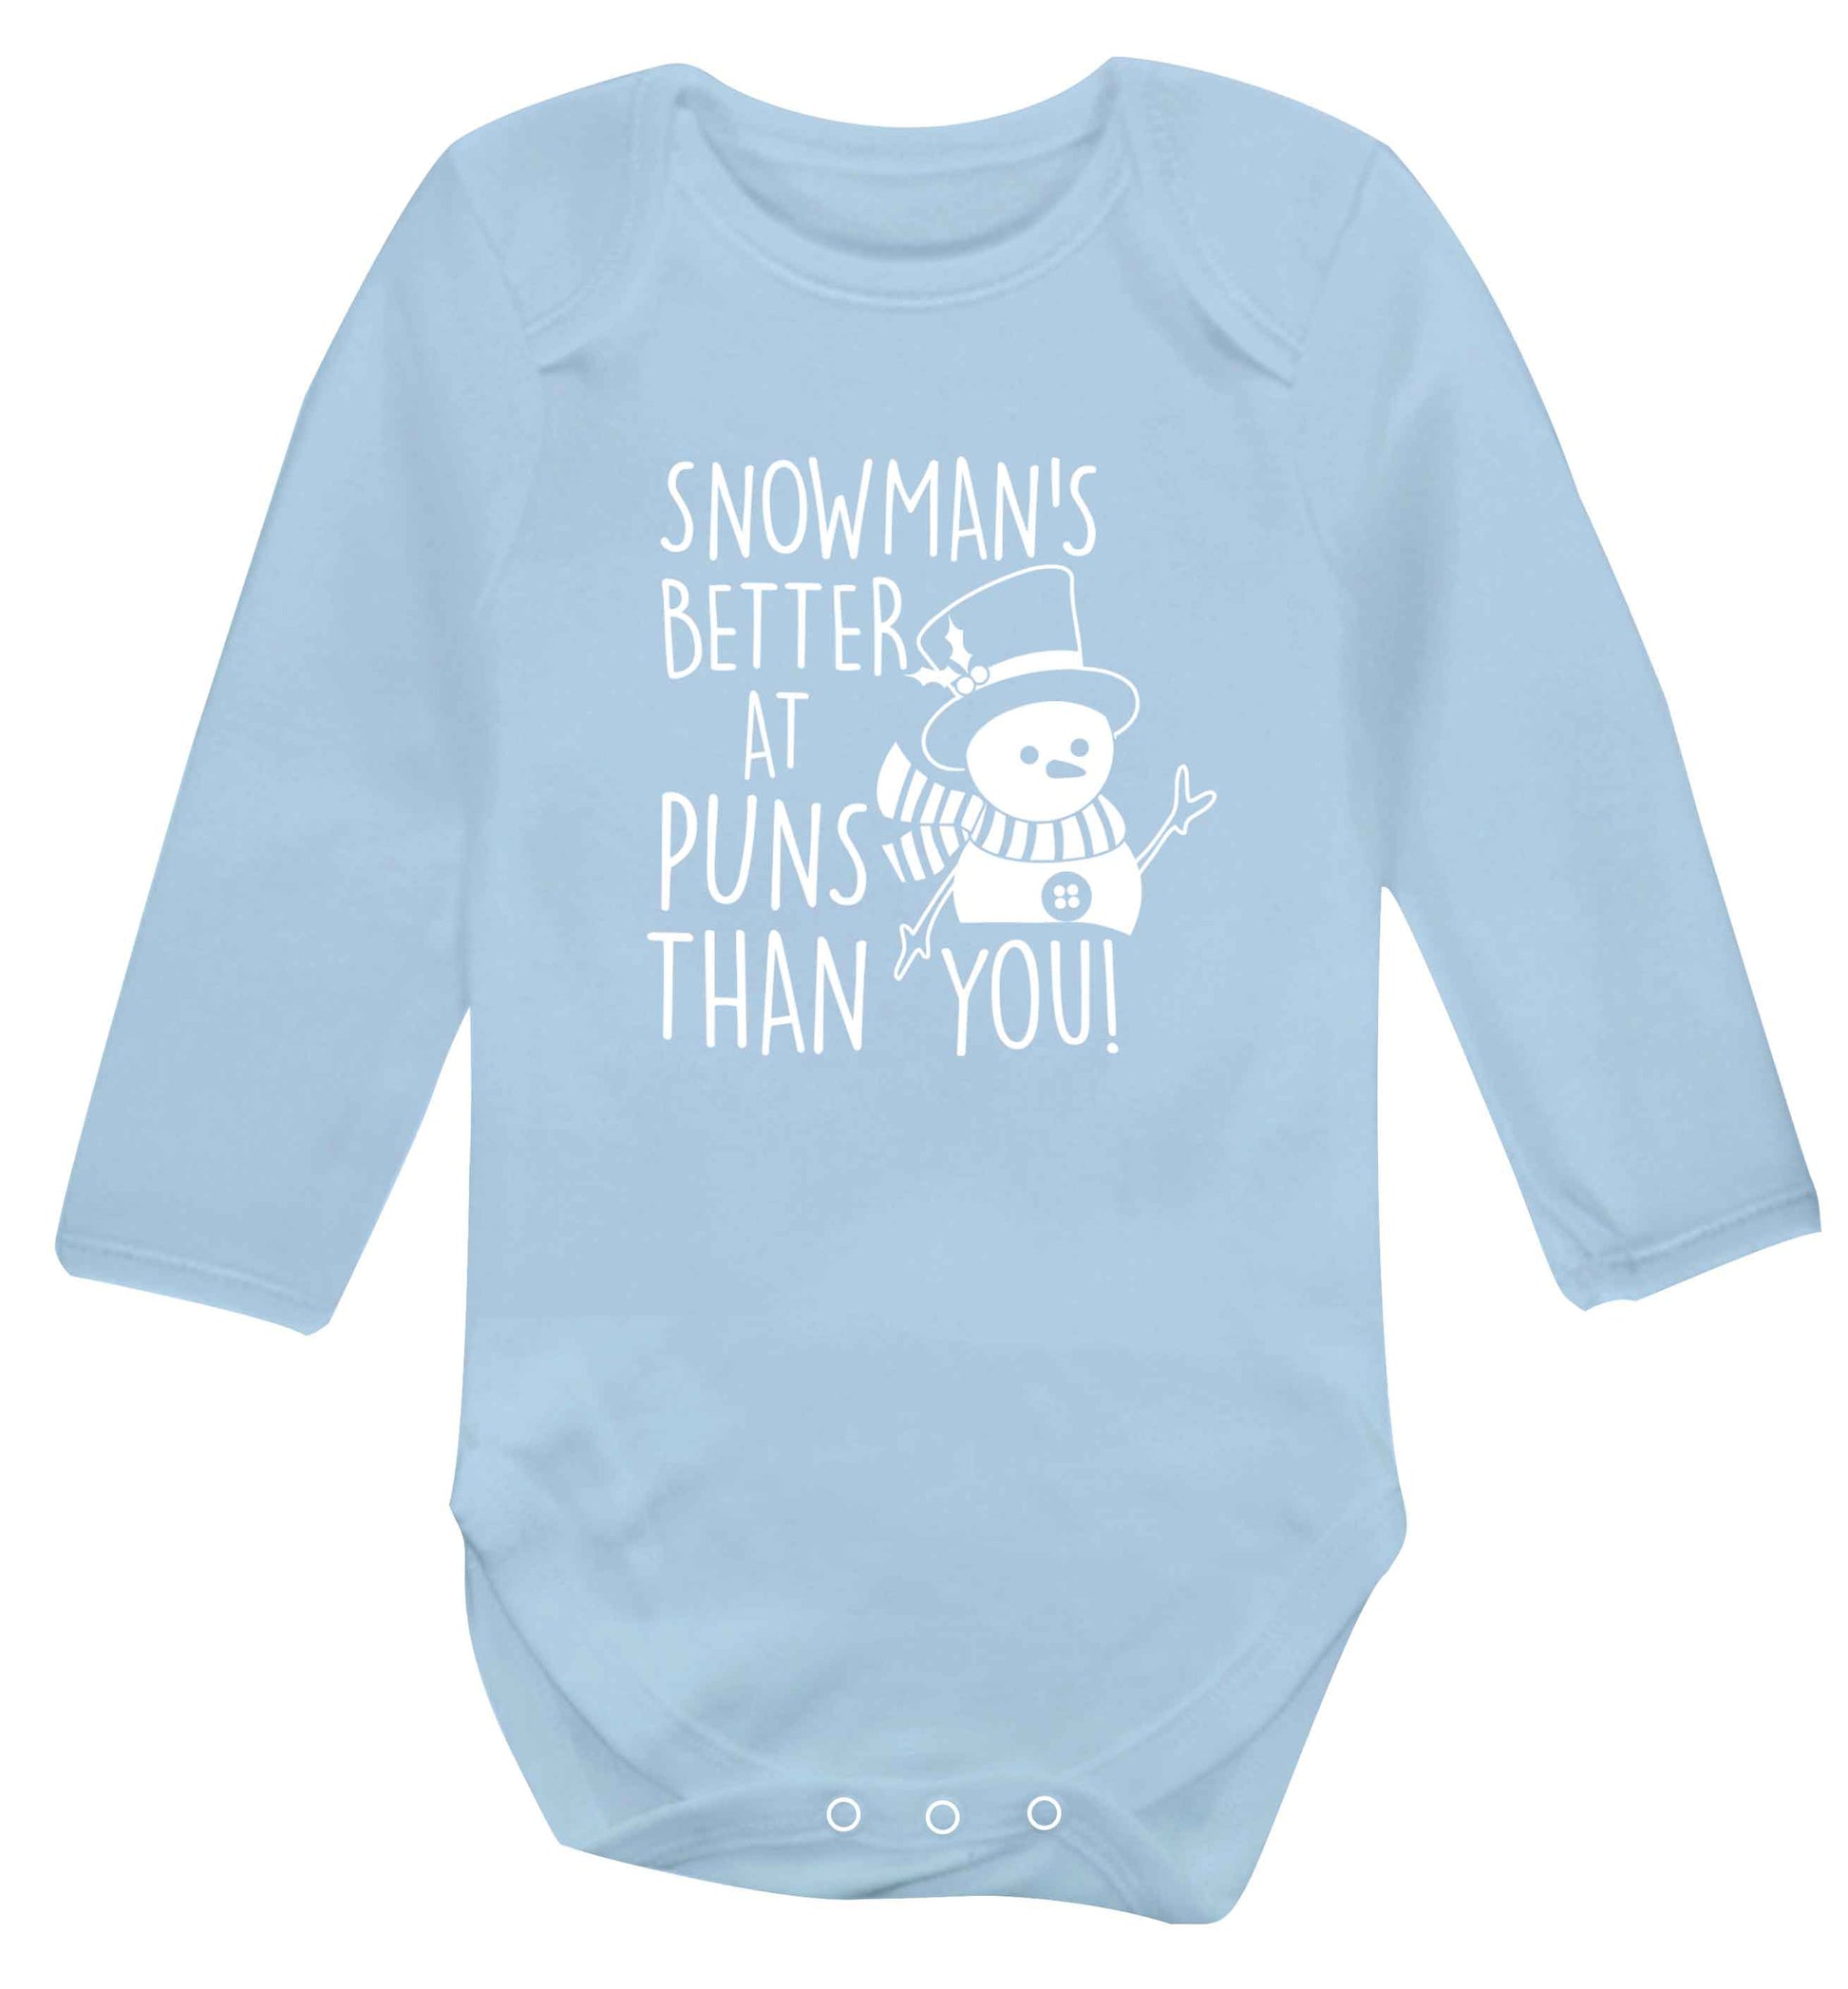 Snowman's Puns You baby vest long sleeved pale blue 6-12 months